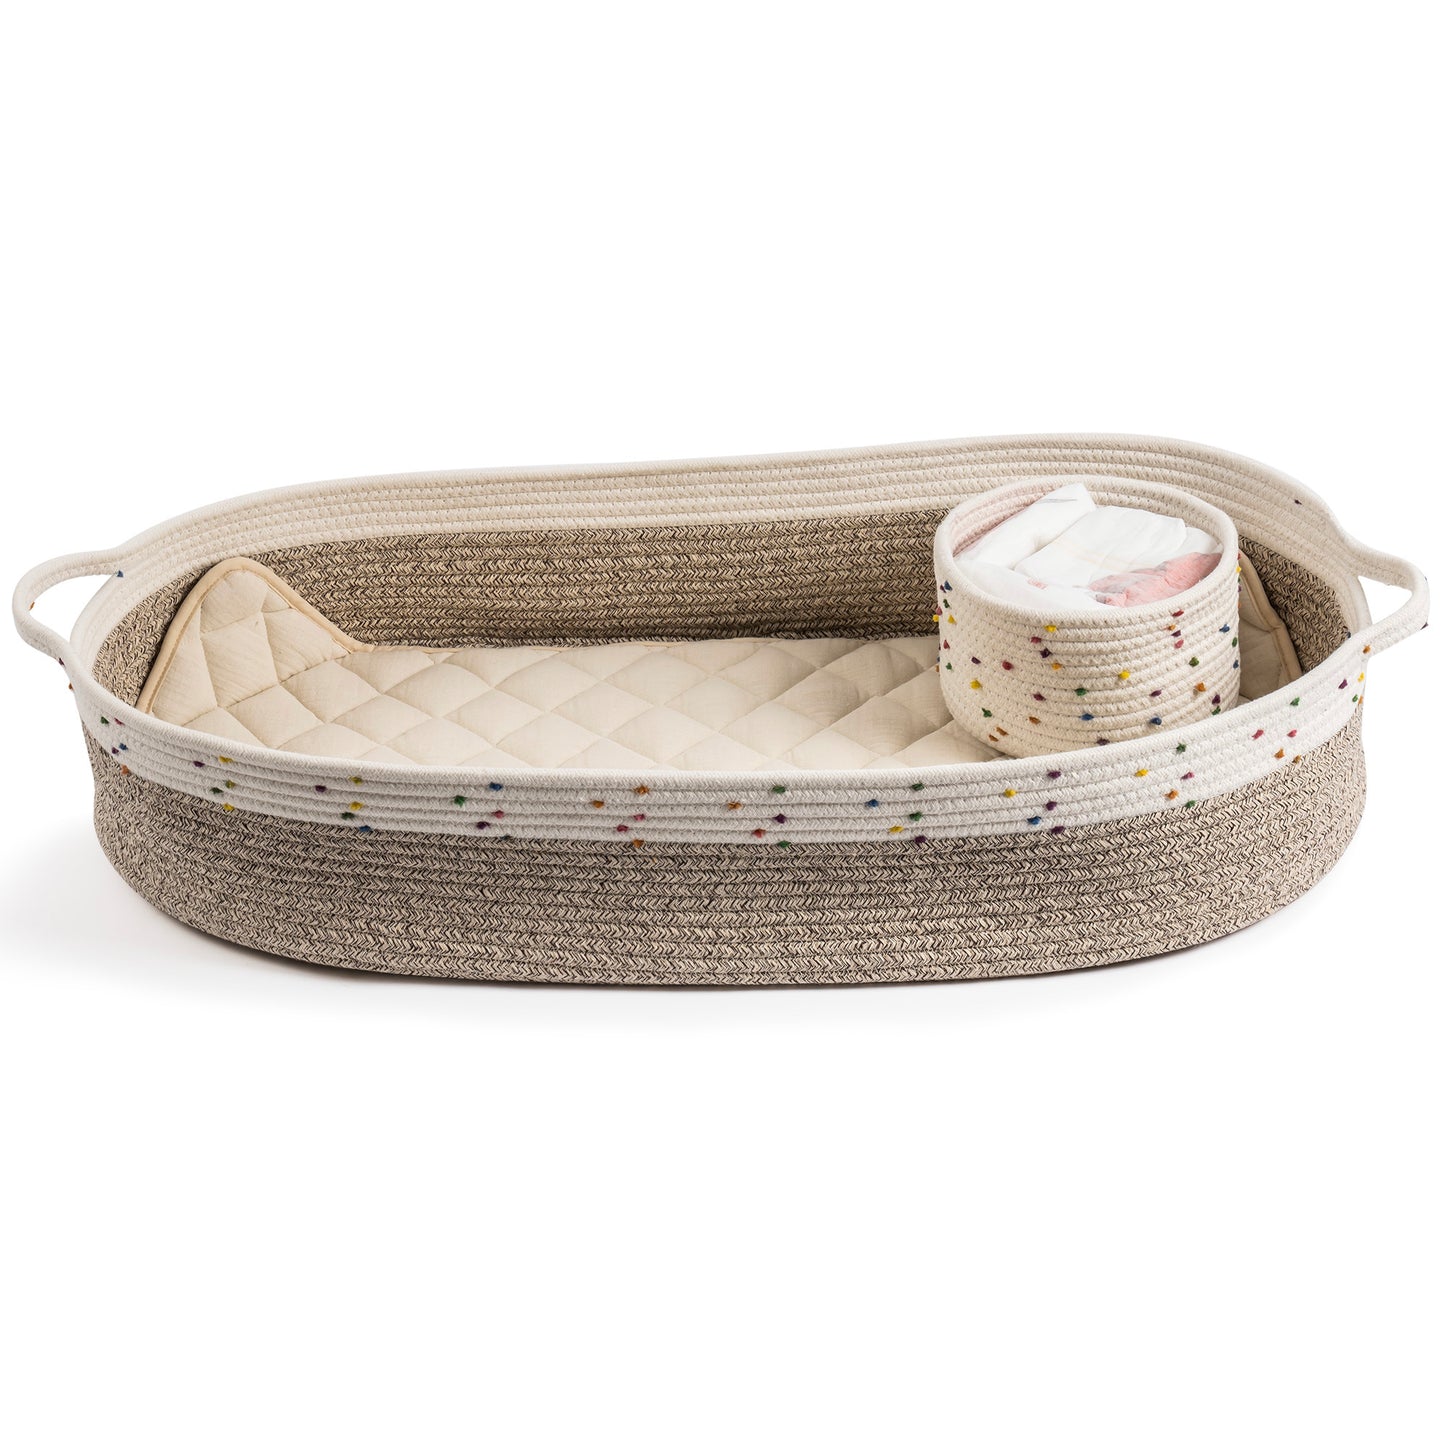 Baby Changing Basket Macrame Boho Theme Moses Basket for Babies Handmade 100% Cotton Rope